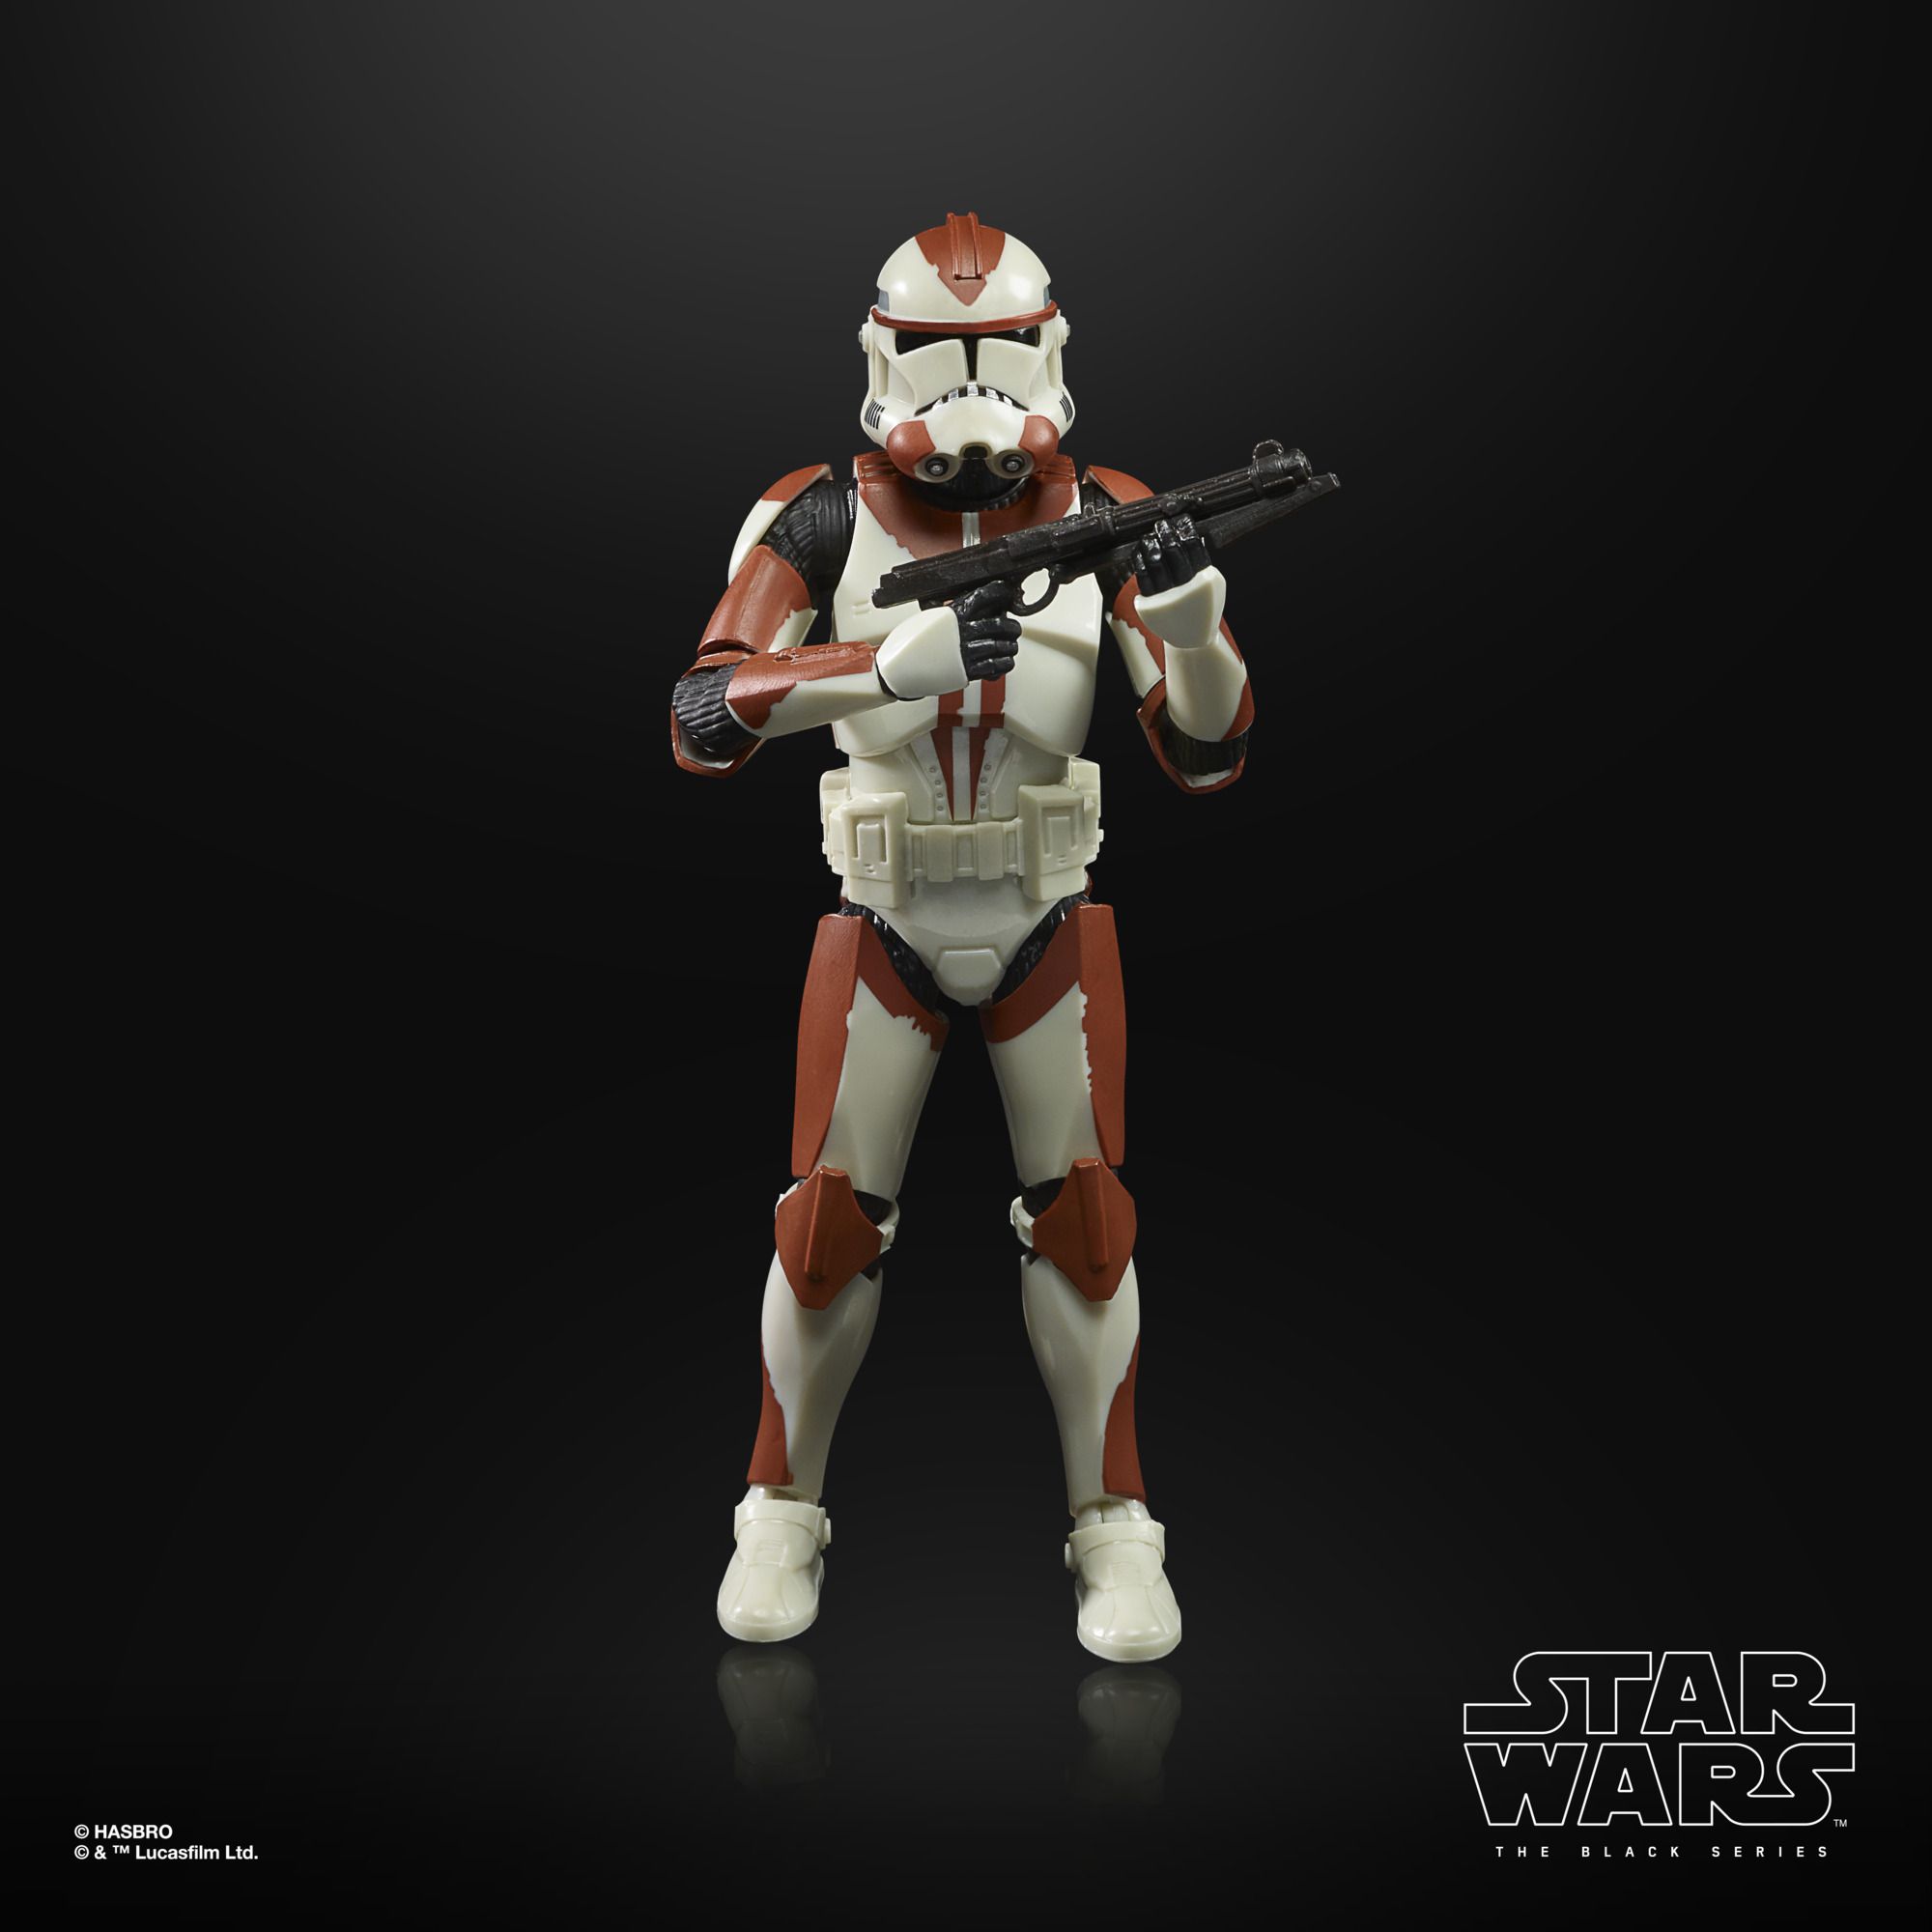 Star Wars The Black Series Actionfigur Clone Trooper (187th Battalion) F55995L0 5010994141691